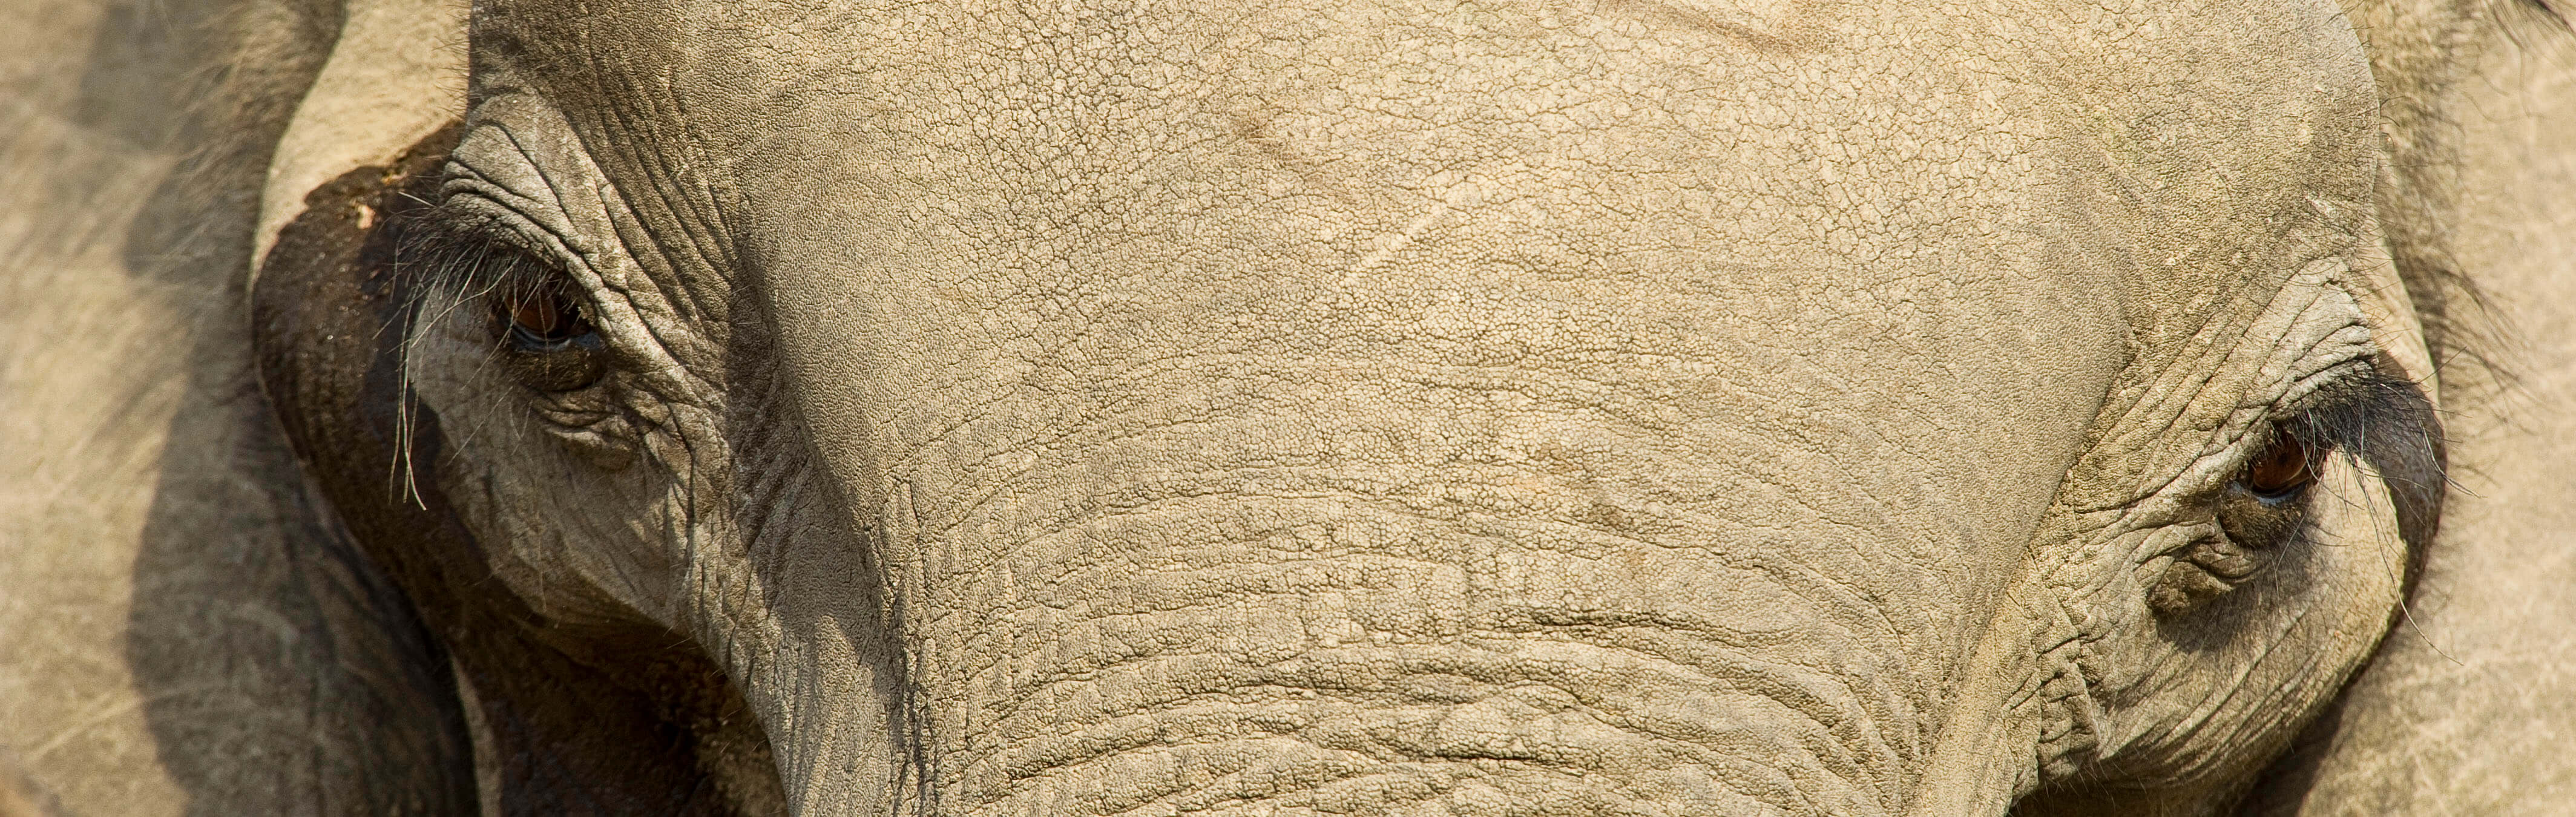 Elephant in Zambia, one of the big five safari animals